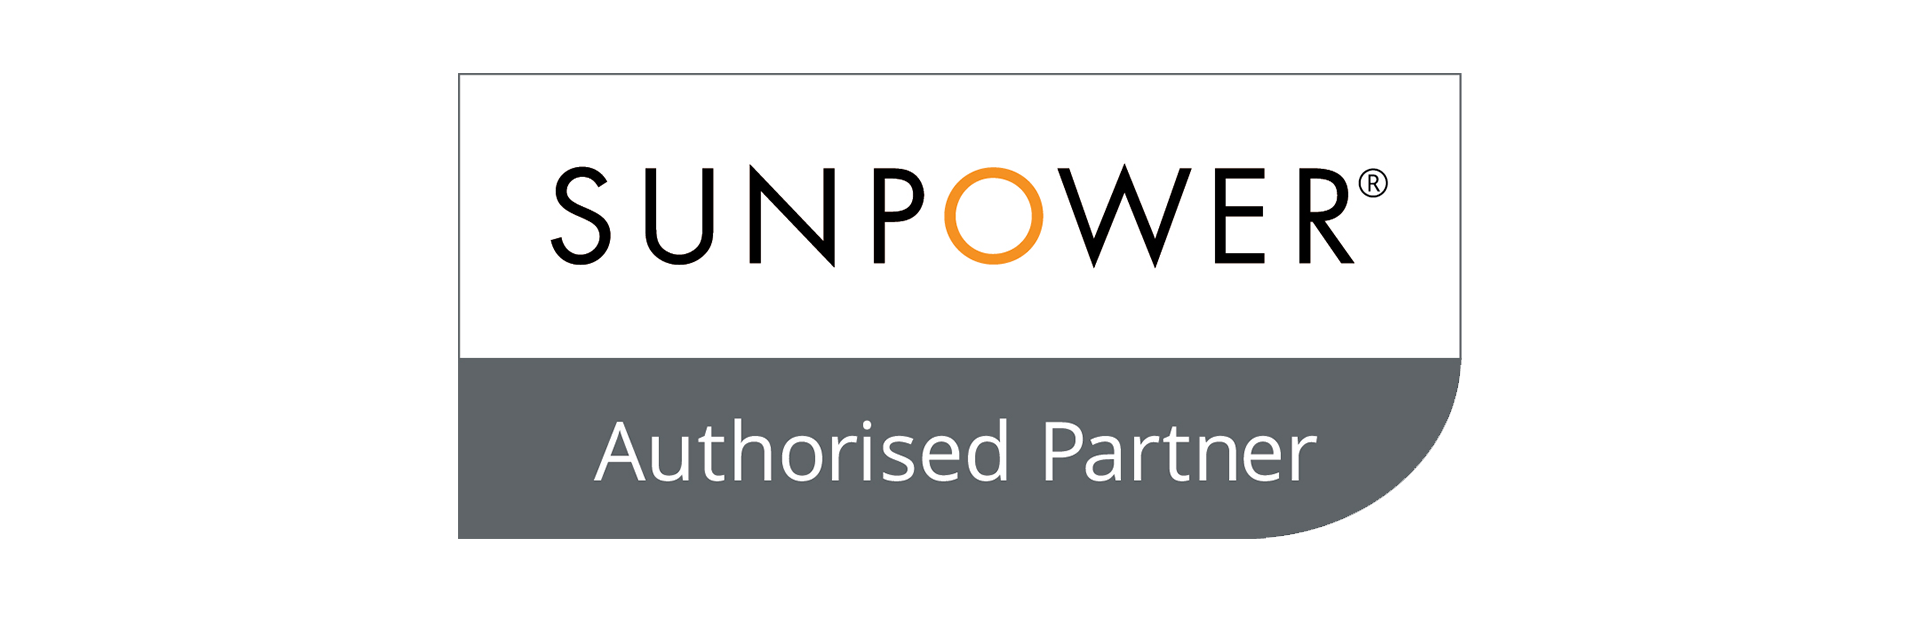 A sunpower authorised partner logo on a white background